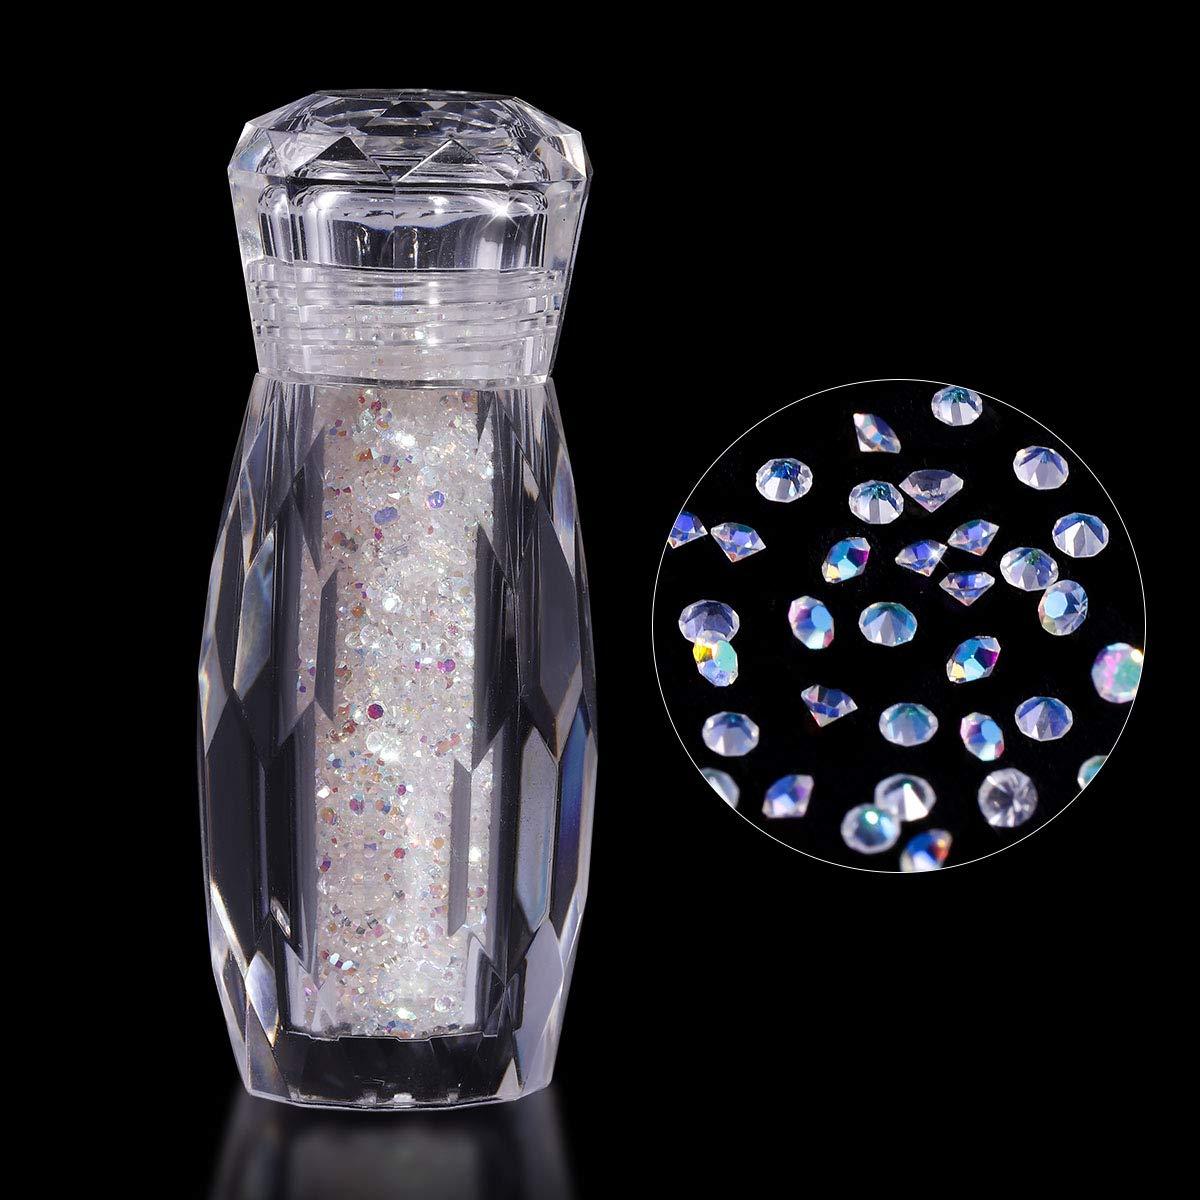 Bling Bling Rhinestones Metal Accents Micro Beads Glass Gems Mix, Sha, MiniatureSweet, Kawaii Resin Crafts, Decoden Cabochons Supplies